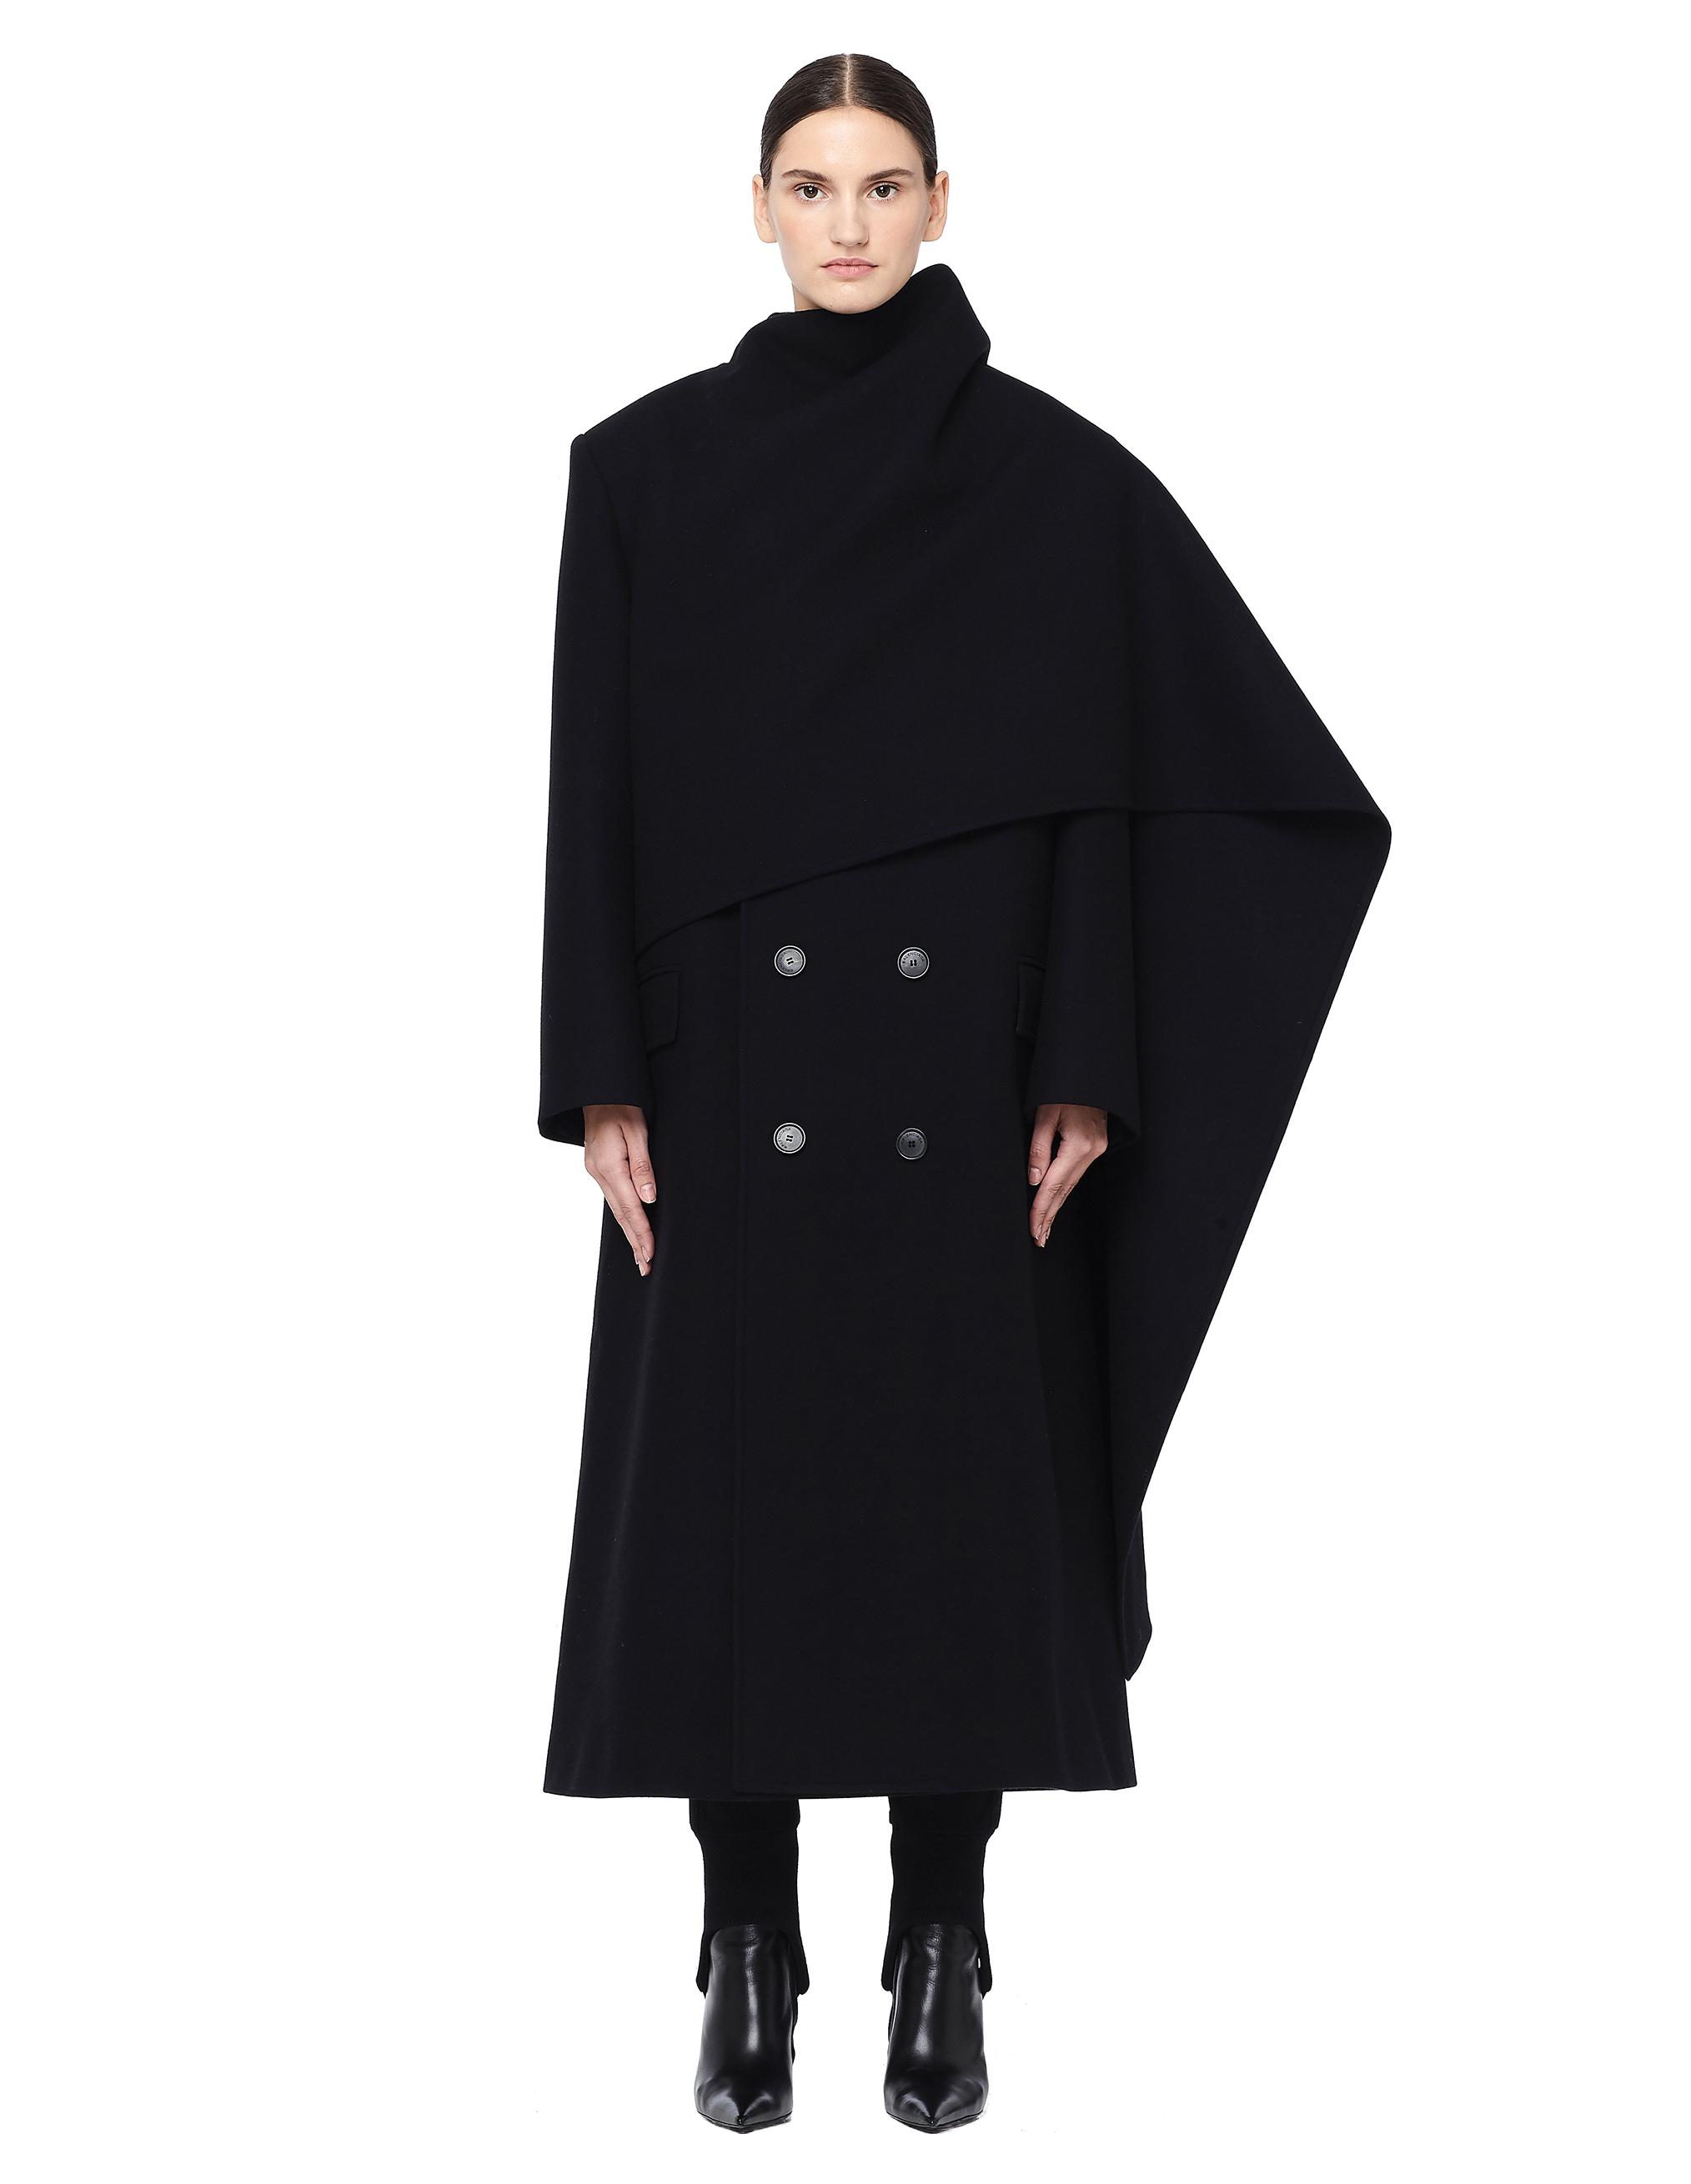 Balenciaga Hybrid Double-breasted Coat in Black - Lyst